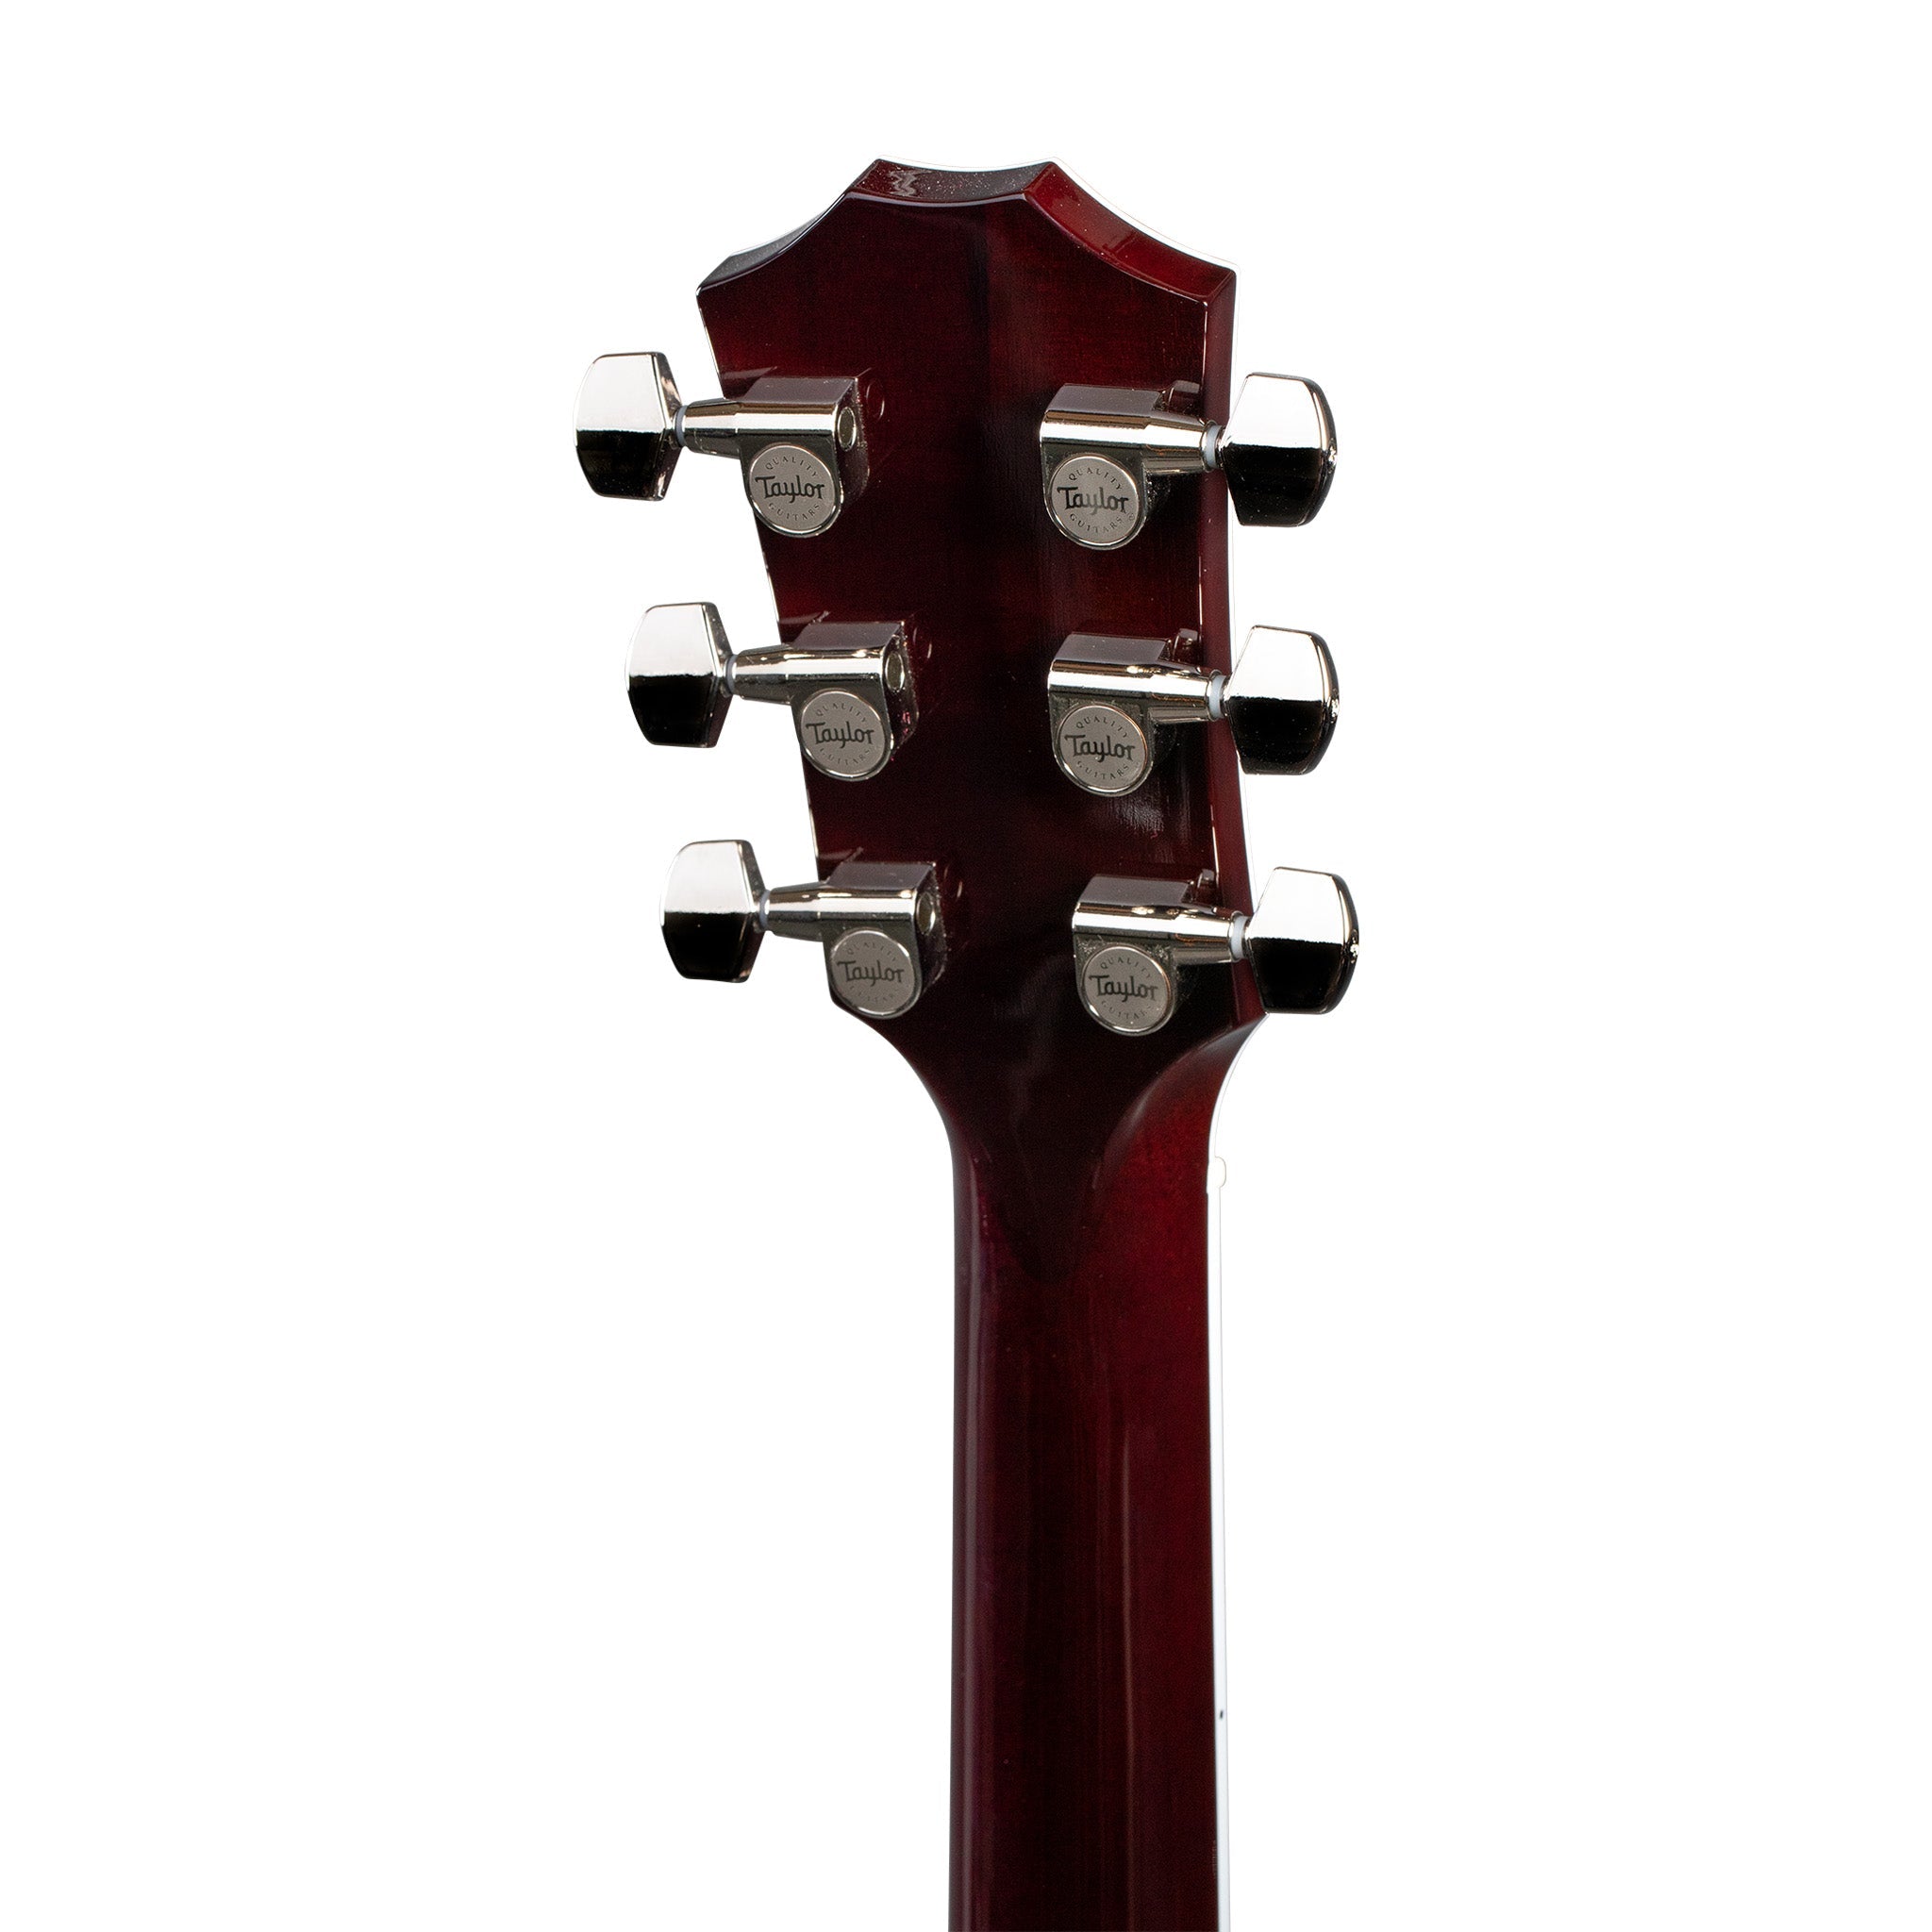 Taylor Special Edition T5z Pro Electric Guitar w/Case, Molasses Burst w/Quilt Maple